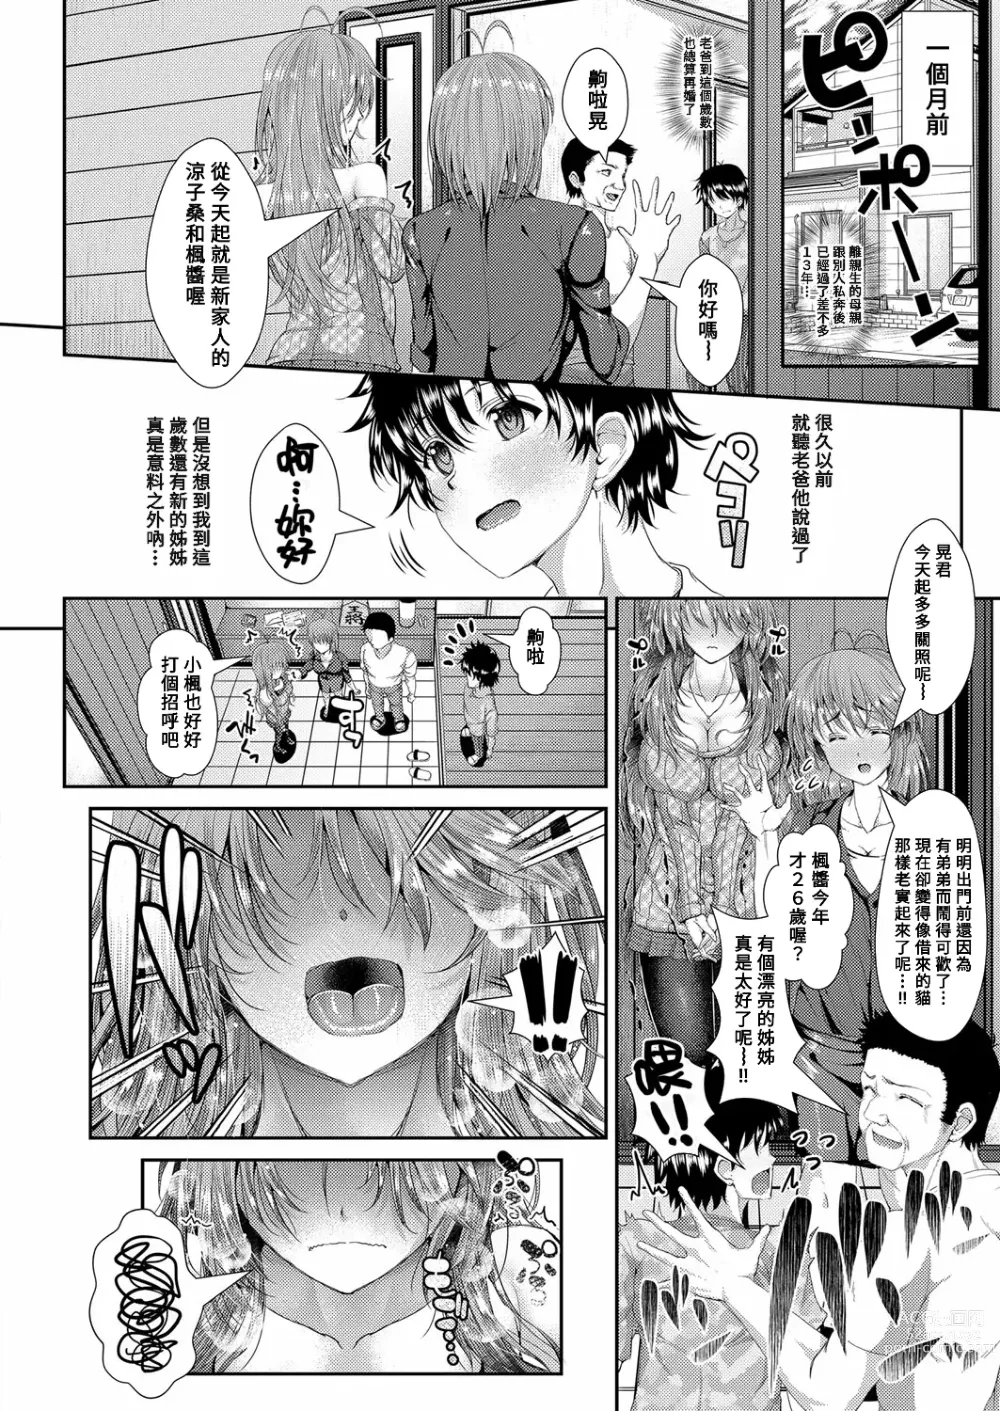 Page 4 of manga Yokujou ☆ Ane Trap